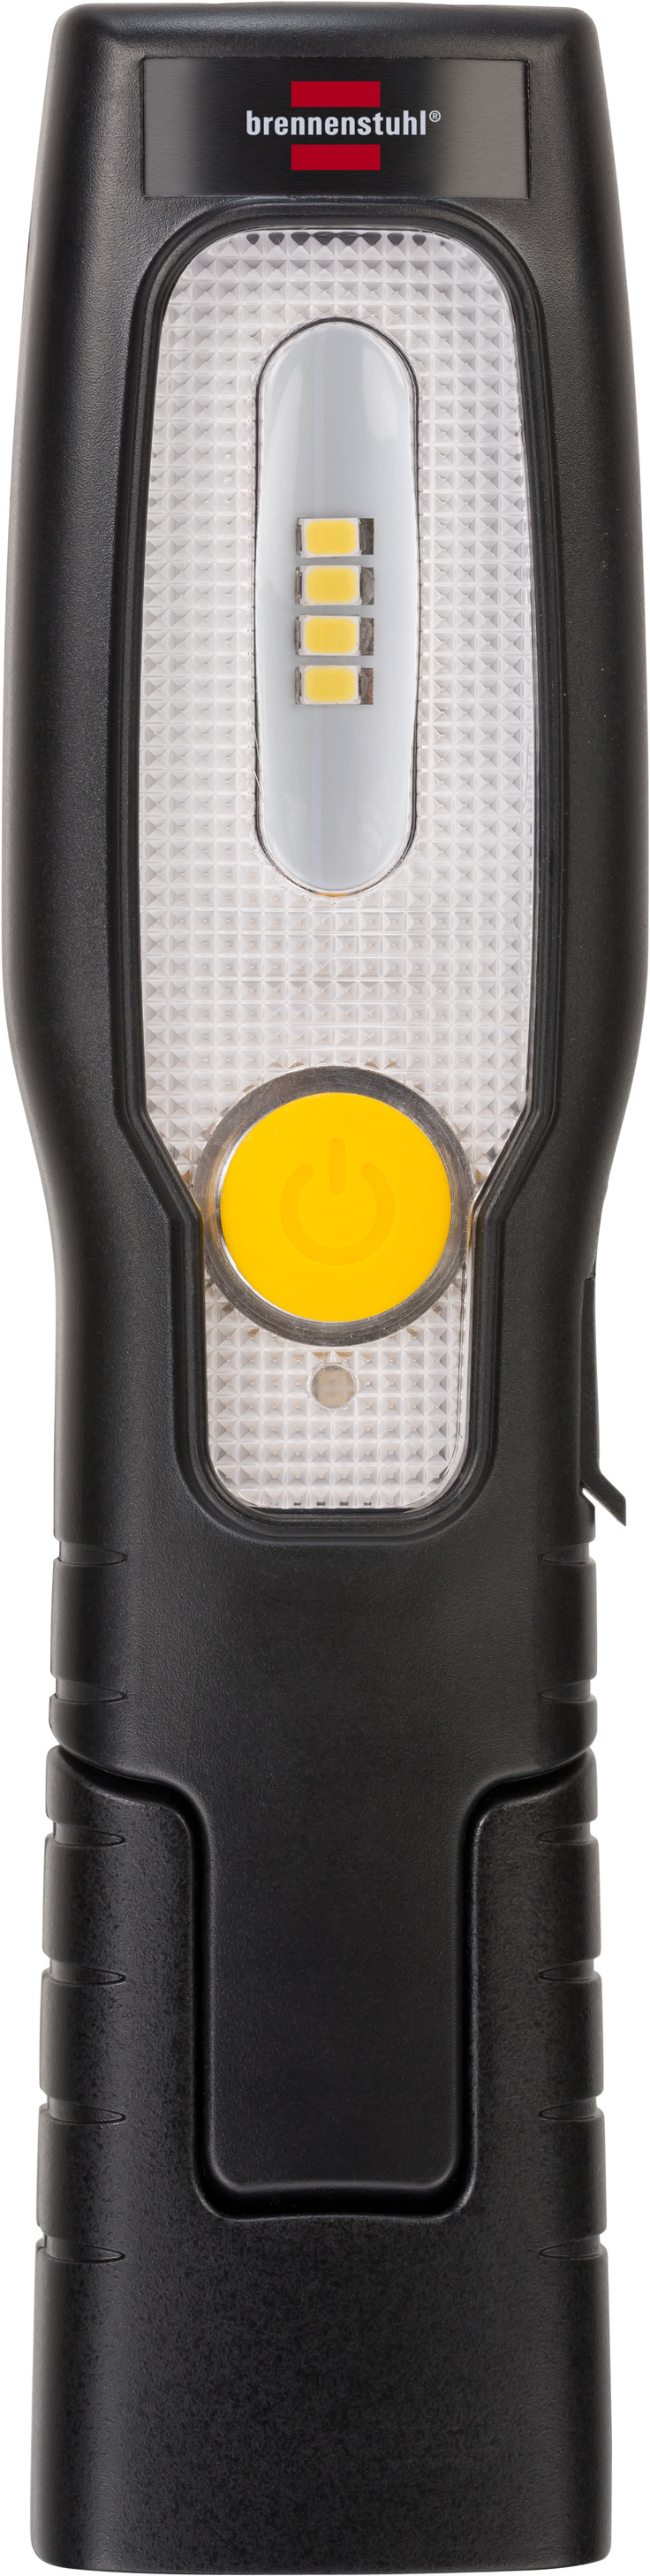 LED Akku-Handleuchte HL 200 A | 250+70lm, knickbar brennenstuhl®